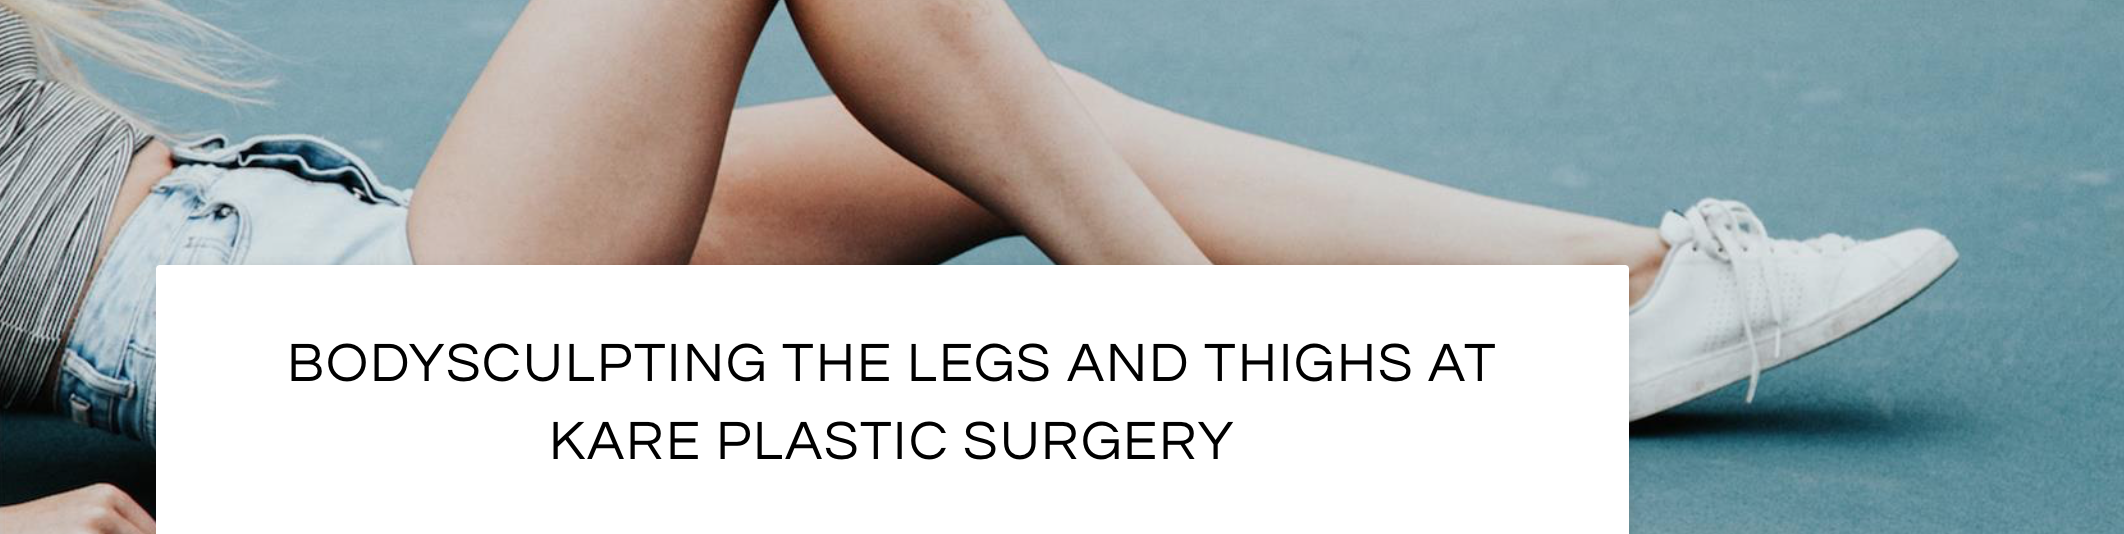 Liposuction in Santa Monica at Kare Plastic Surgery on Montana Avenue